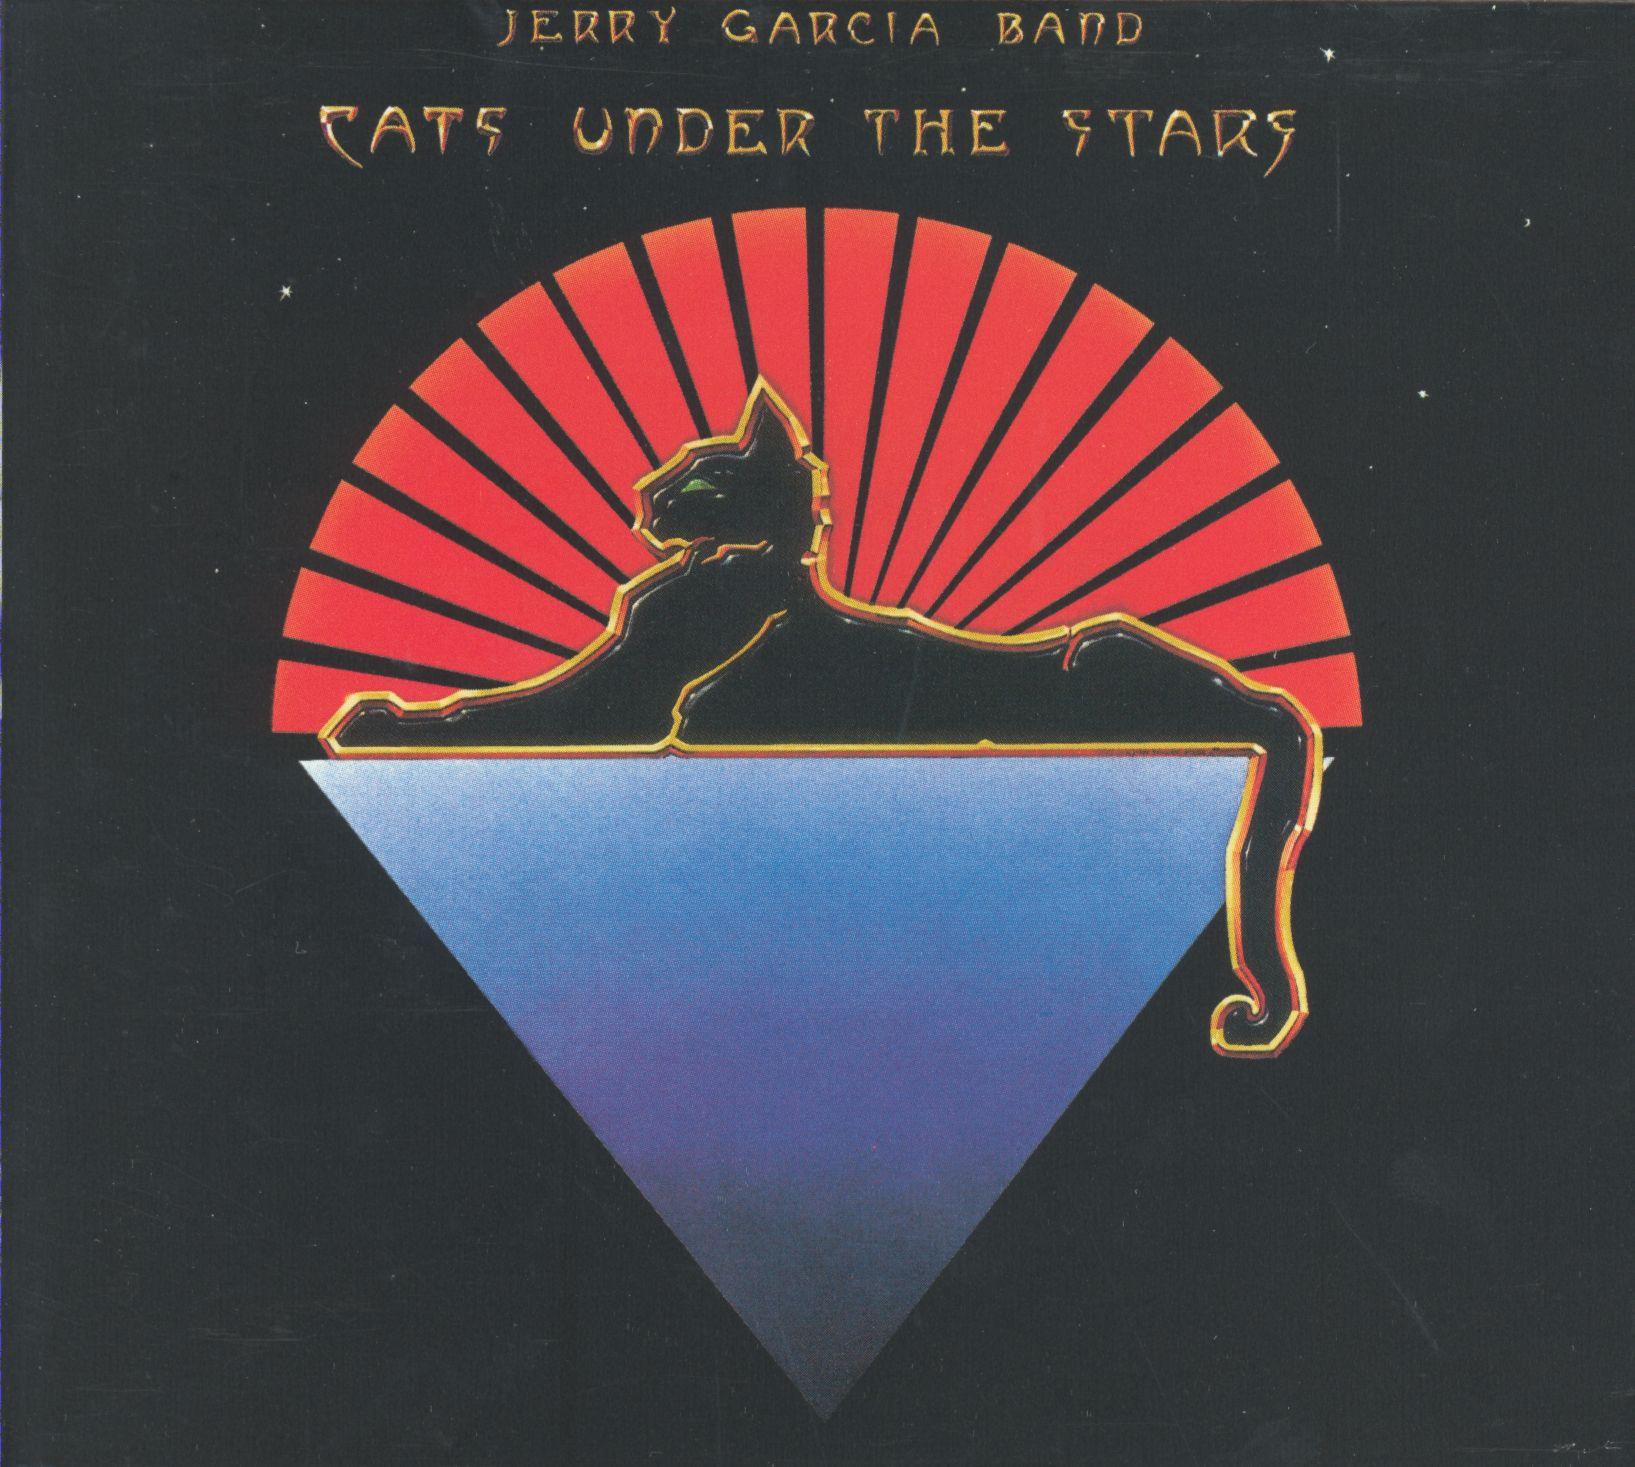 Grateful Dead Cat Logo - Cats Under The Stars - Jerry Garcia Band, LP (Front) | Grateful Dead